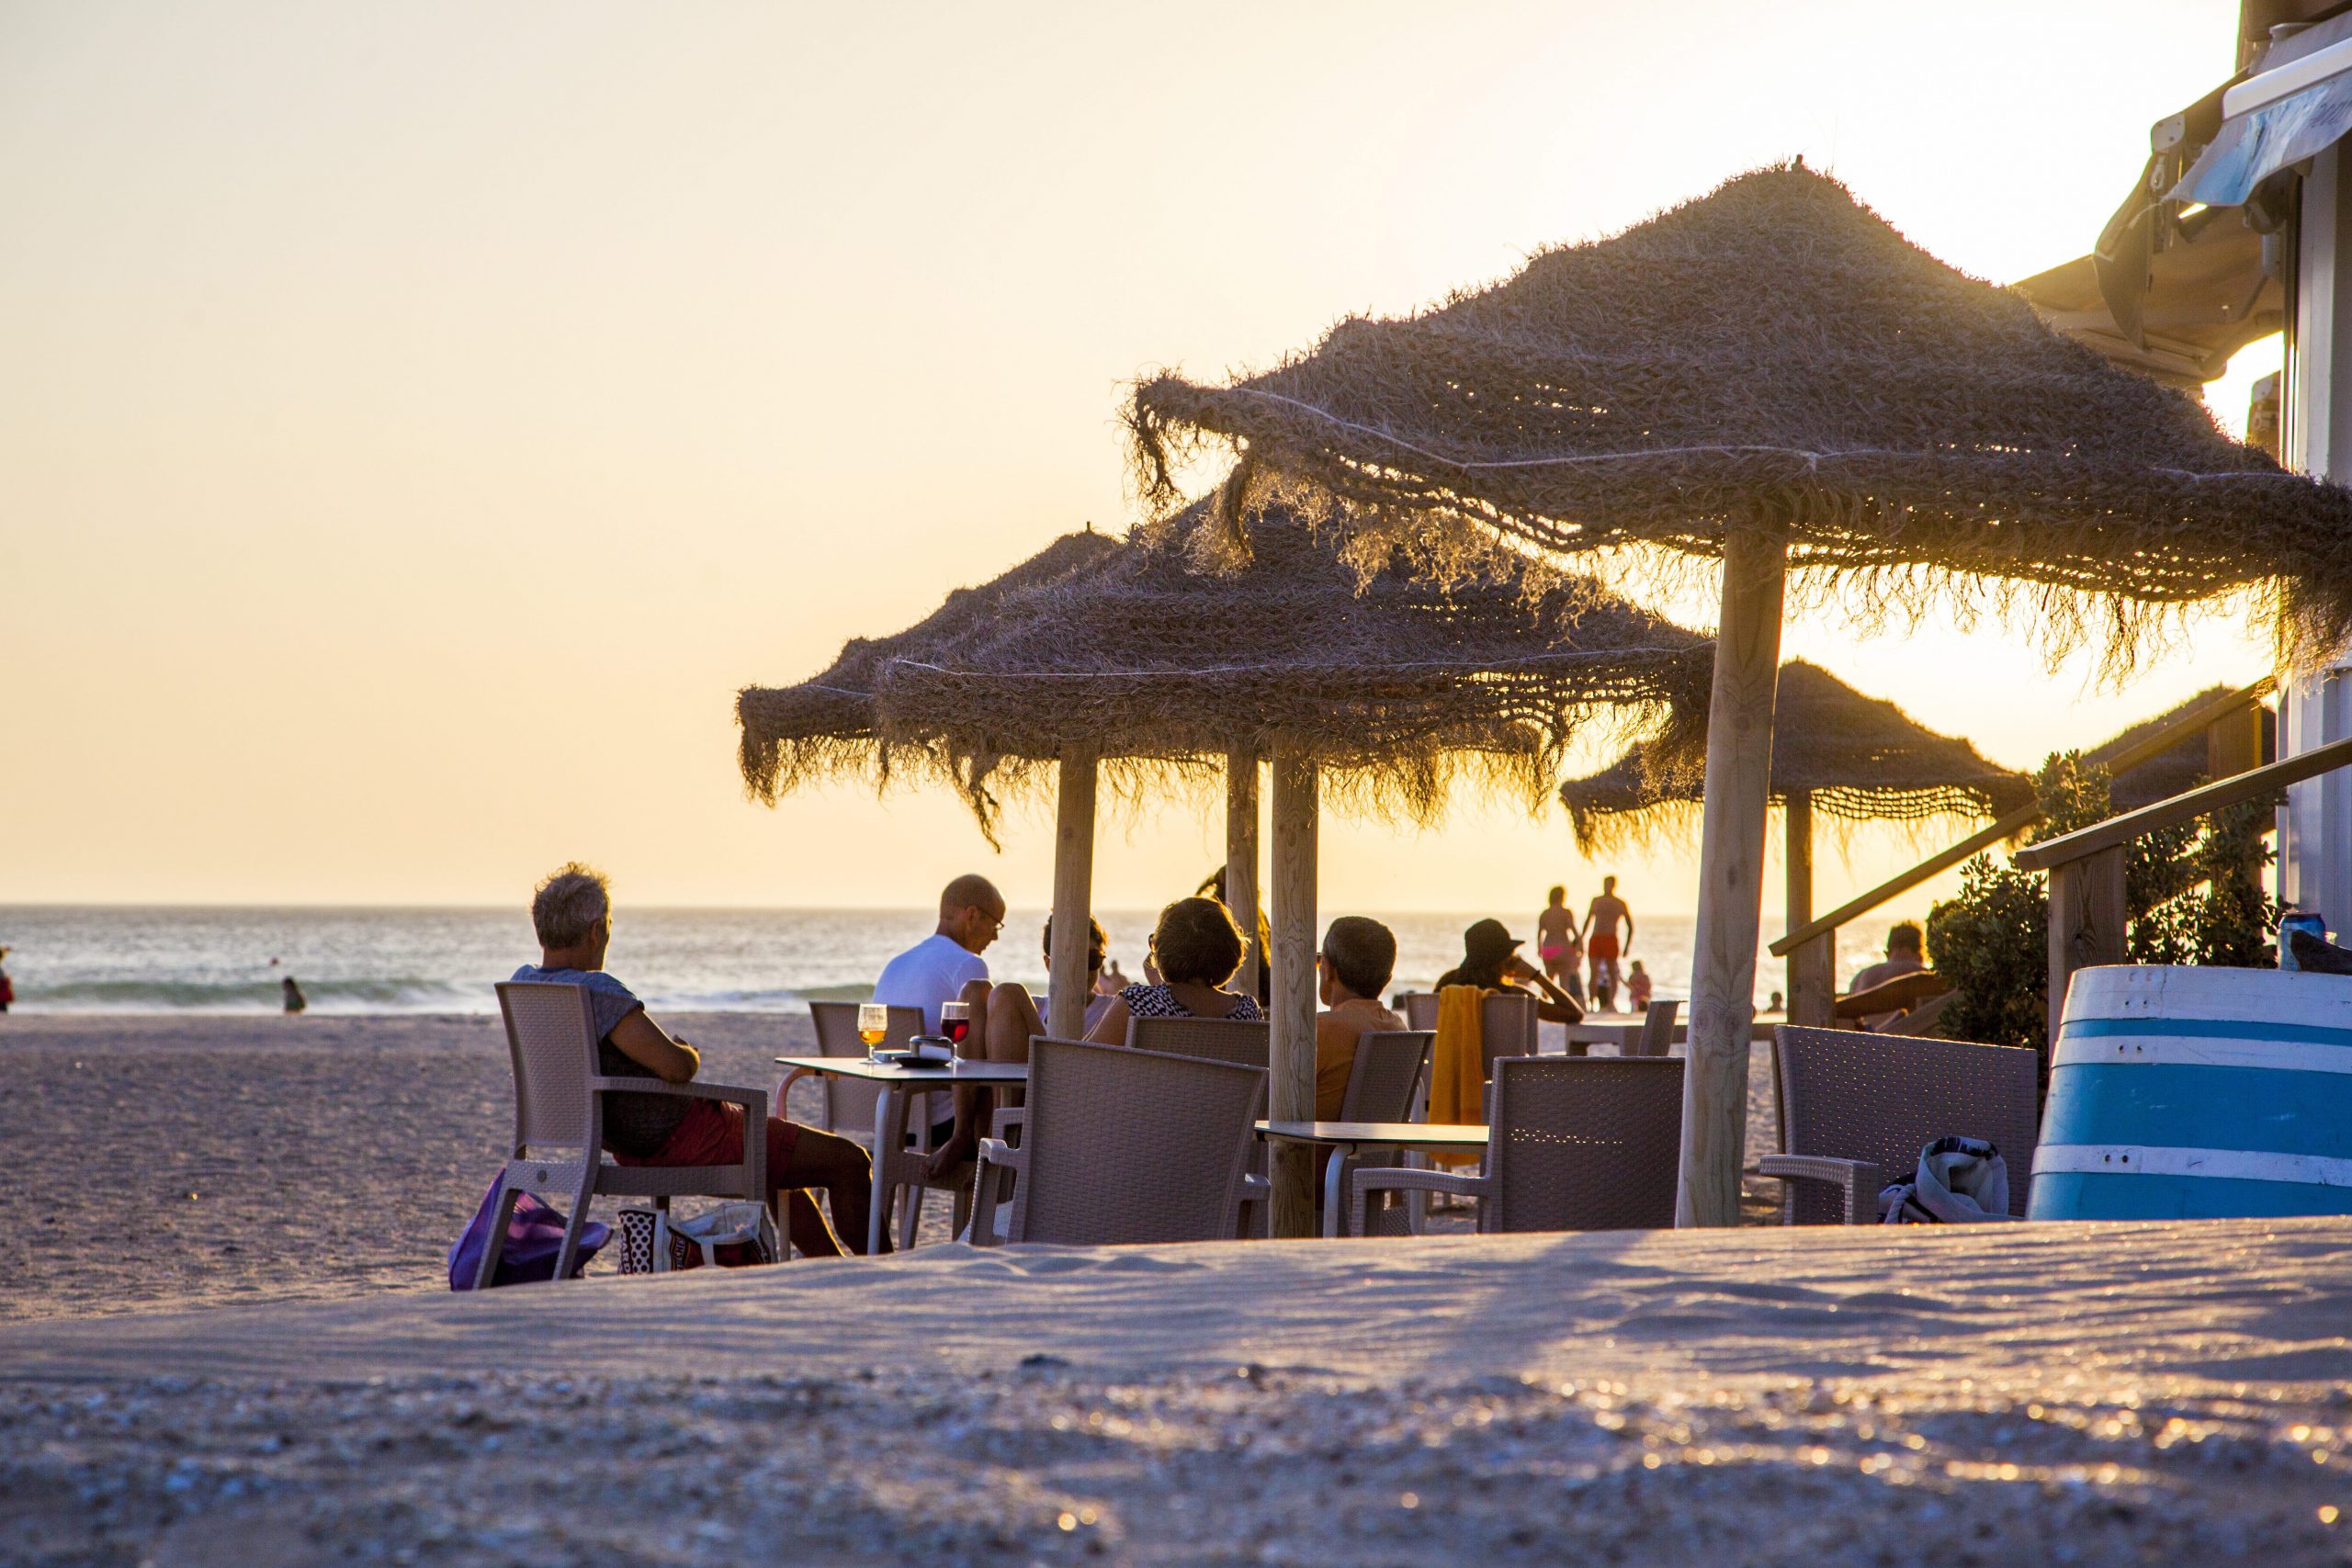 Malaga boasts three of the best beach bars in Spain top gastronomy magazine reveals